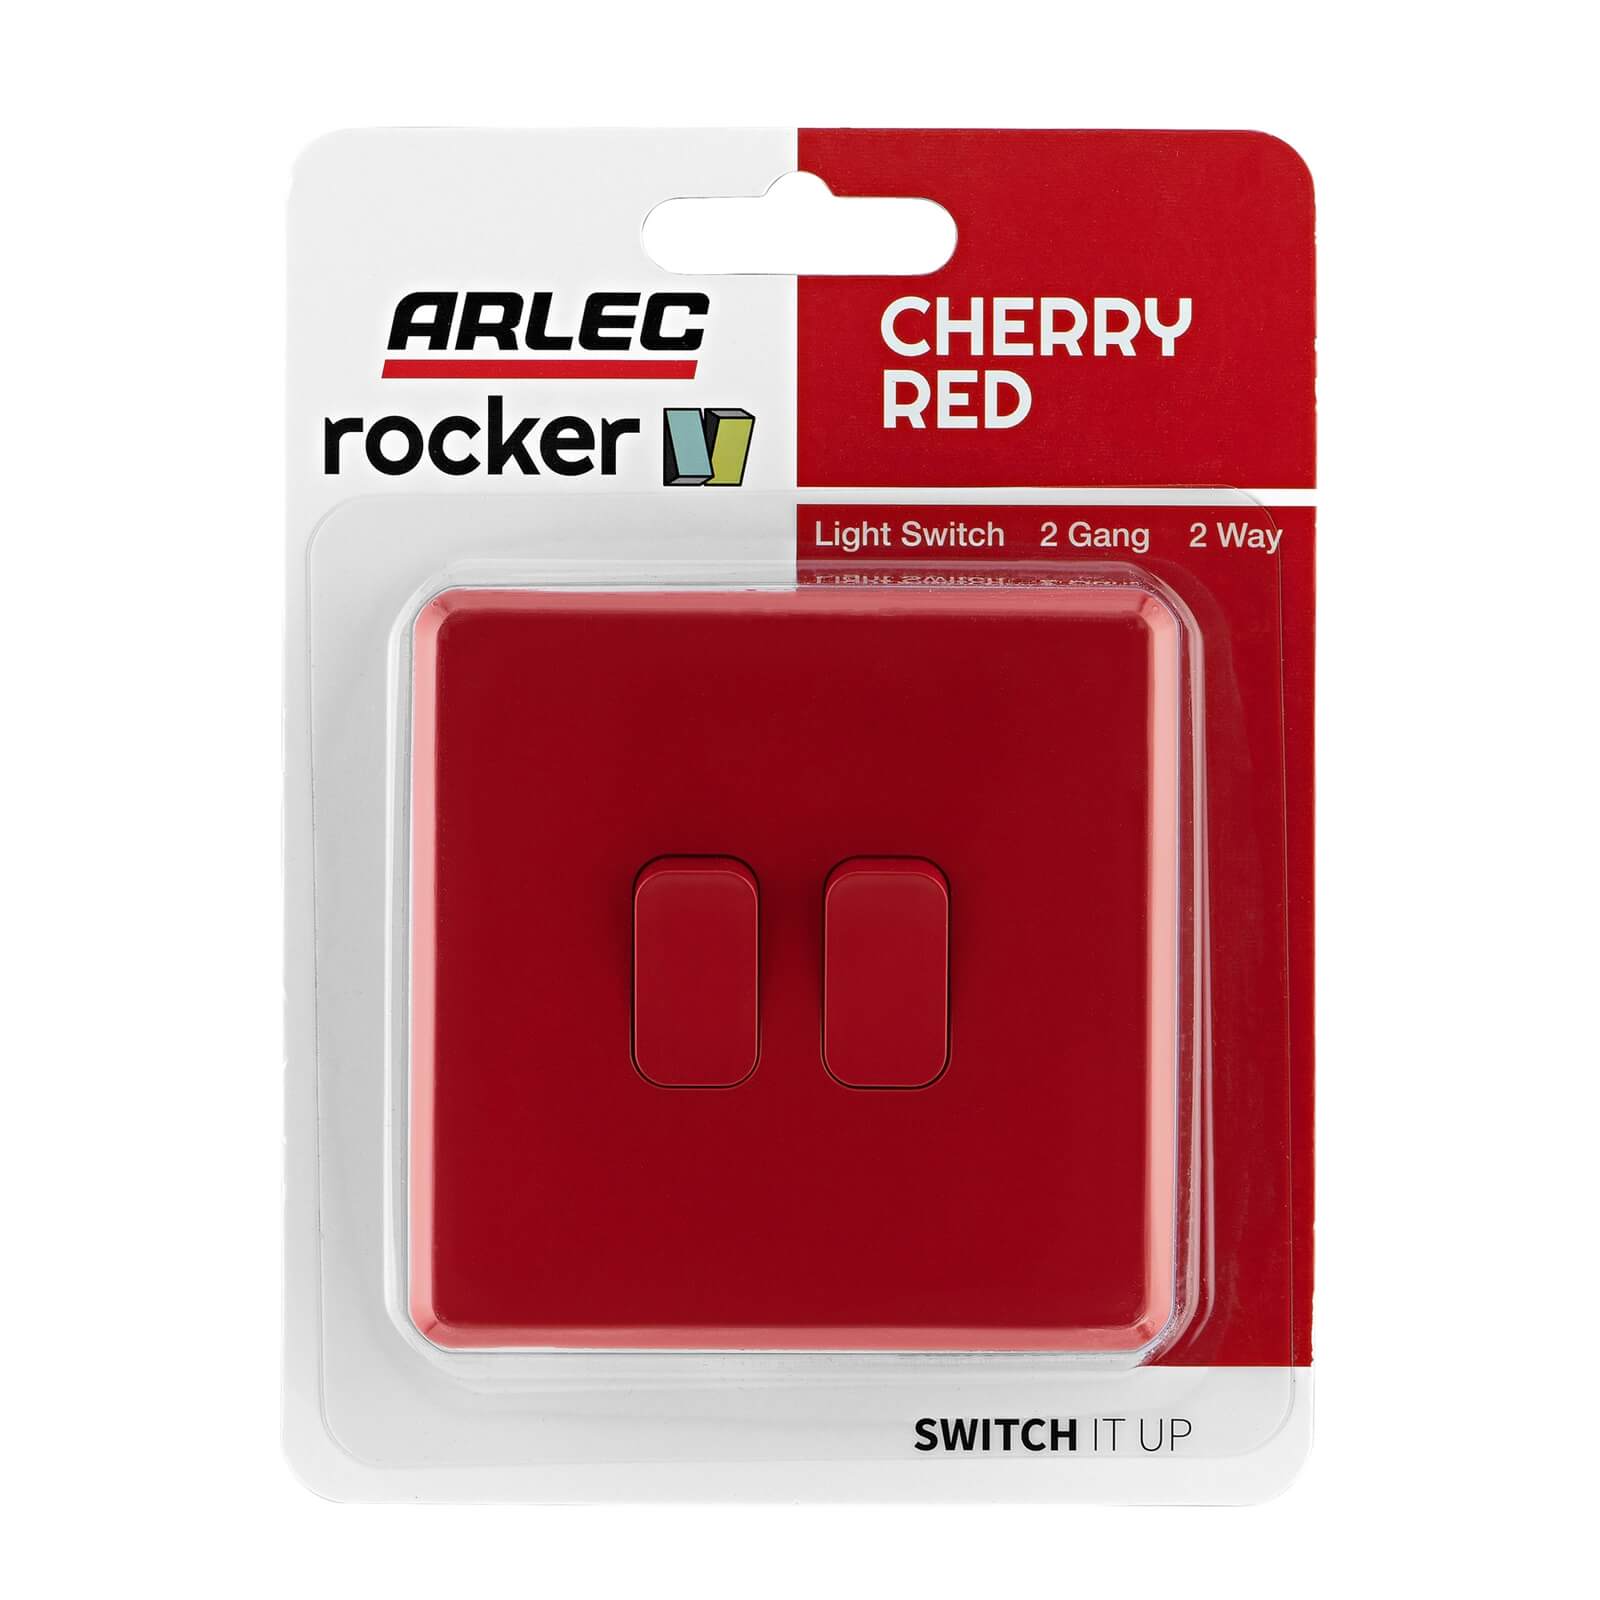 Arlec Rocker 10A 2Gang 2Way Cherry Red Double light switch